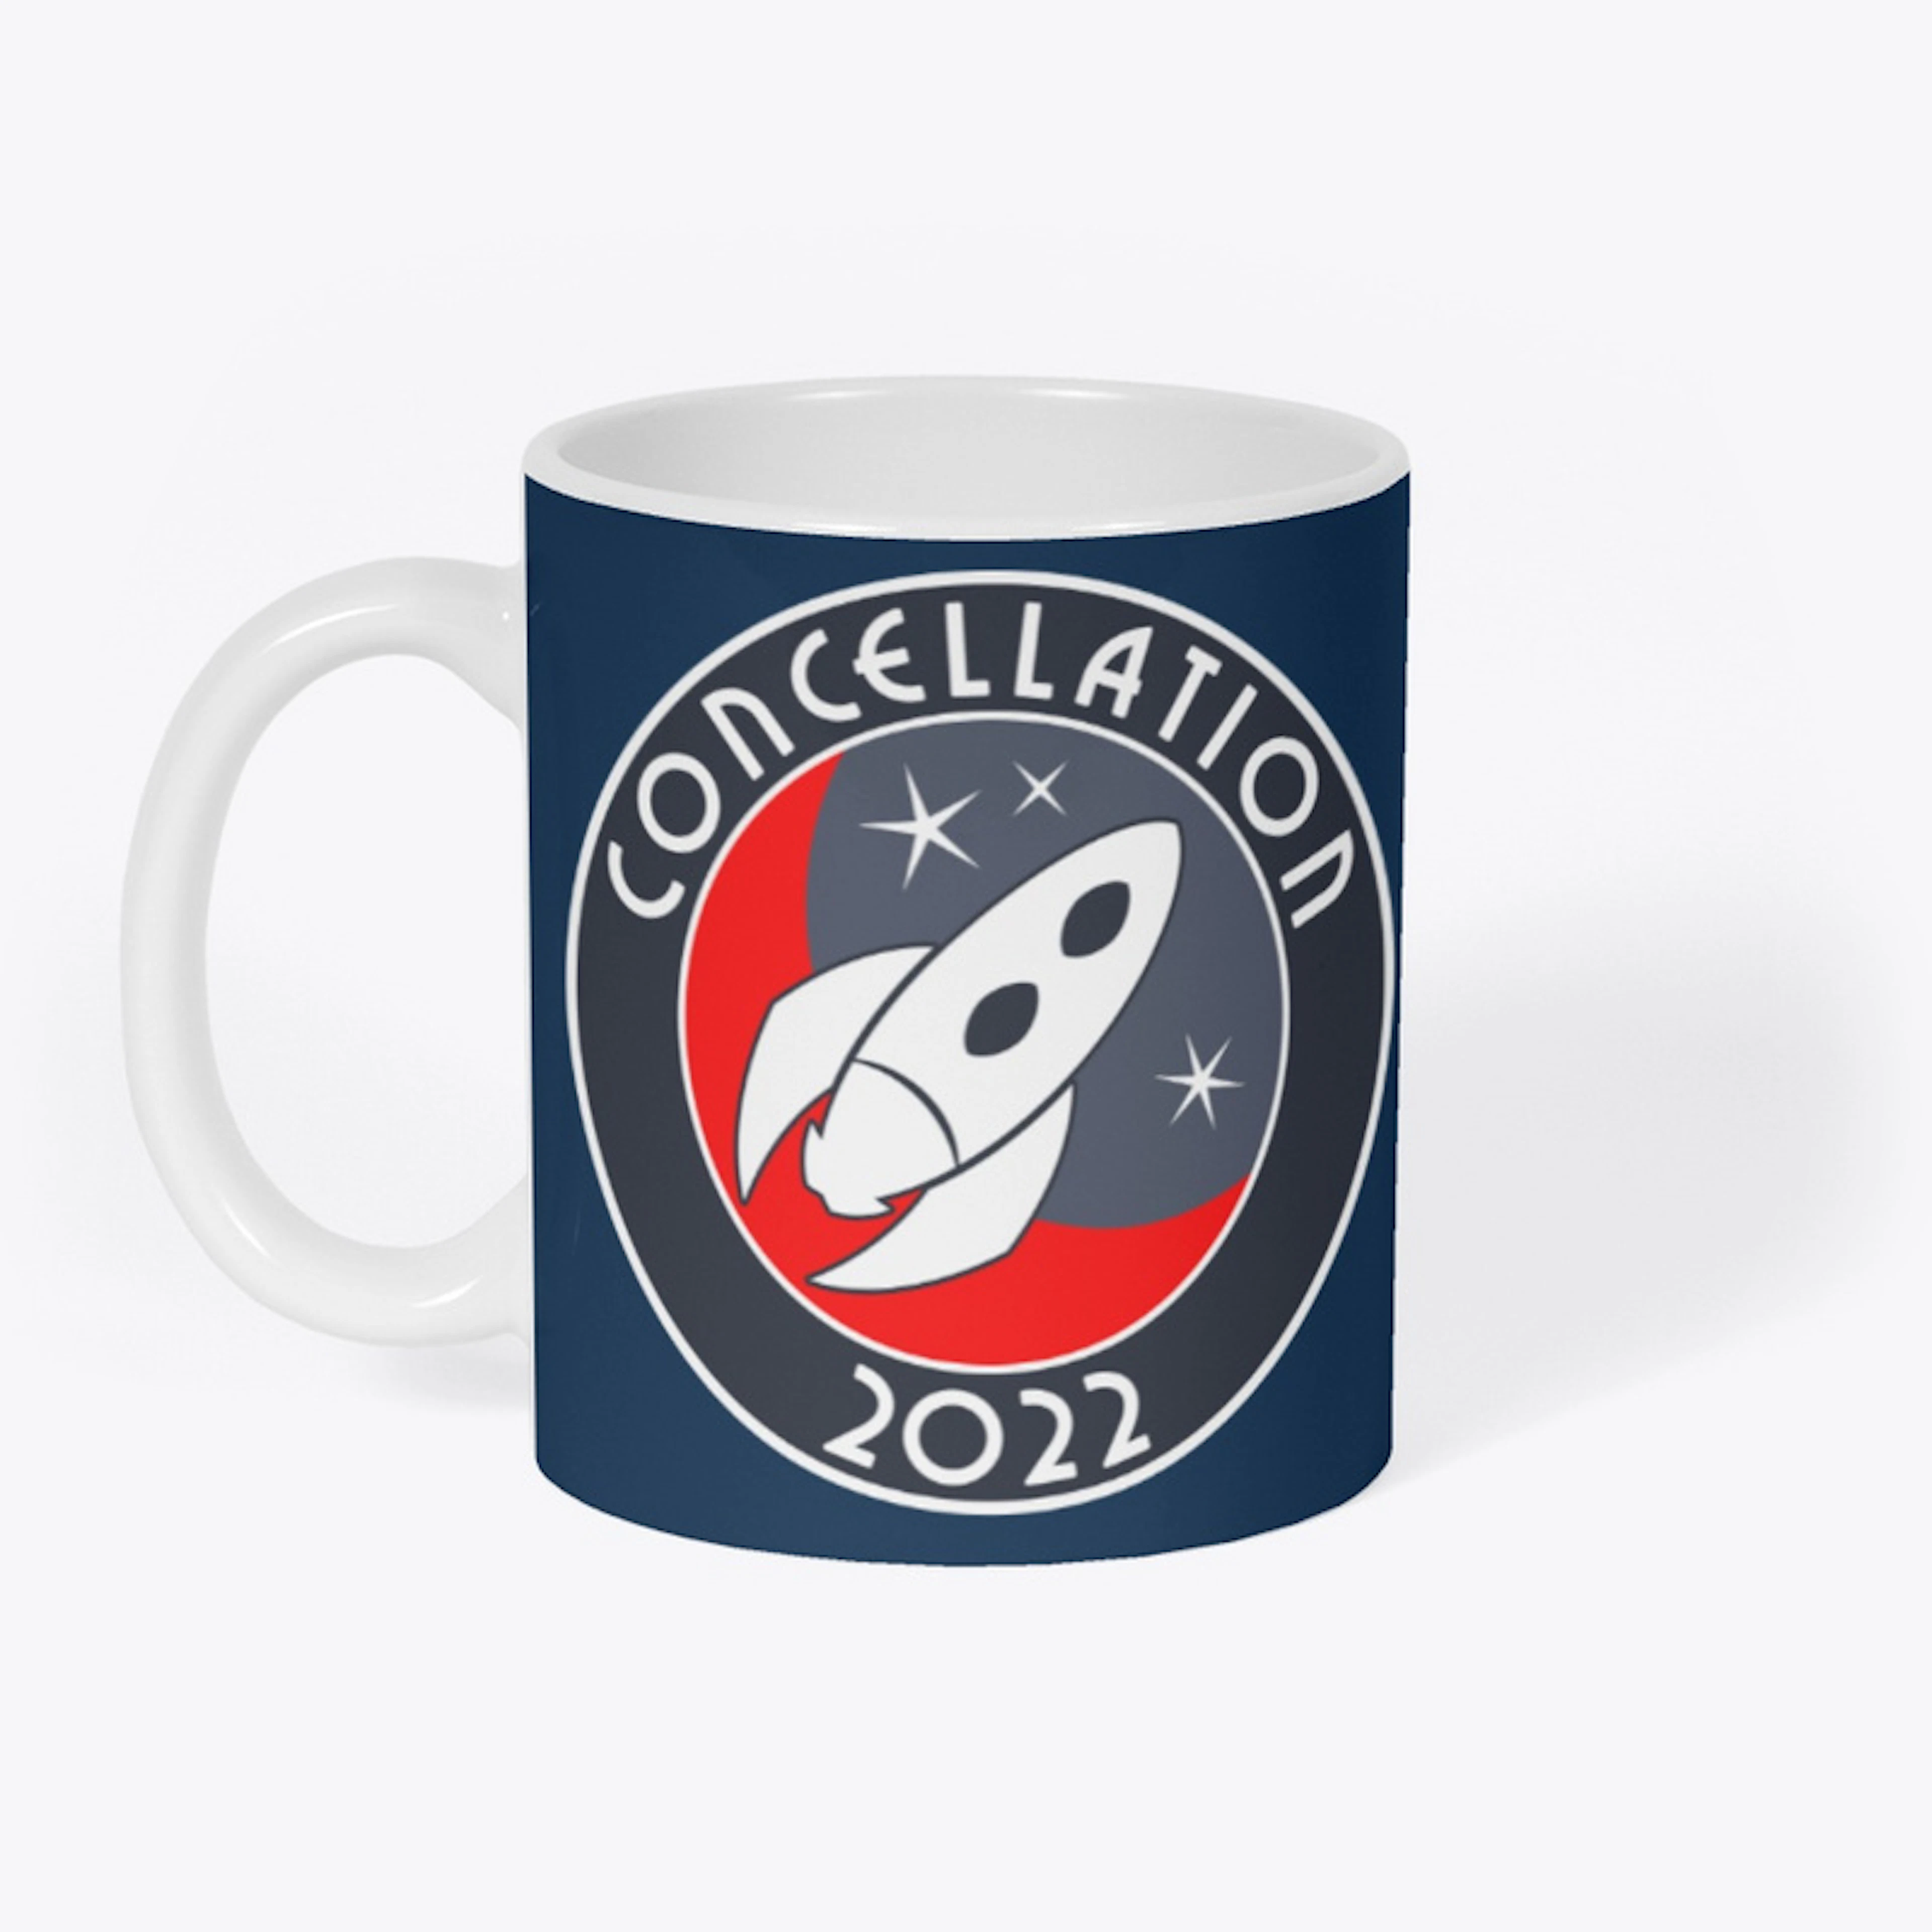 Concellation® 2022 Logowear